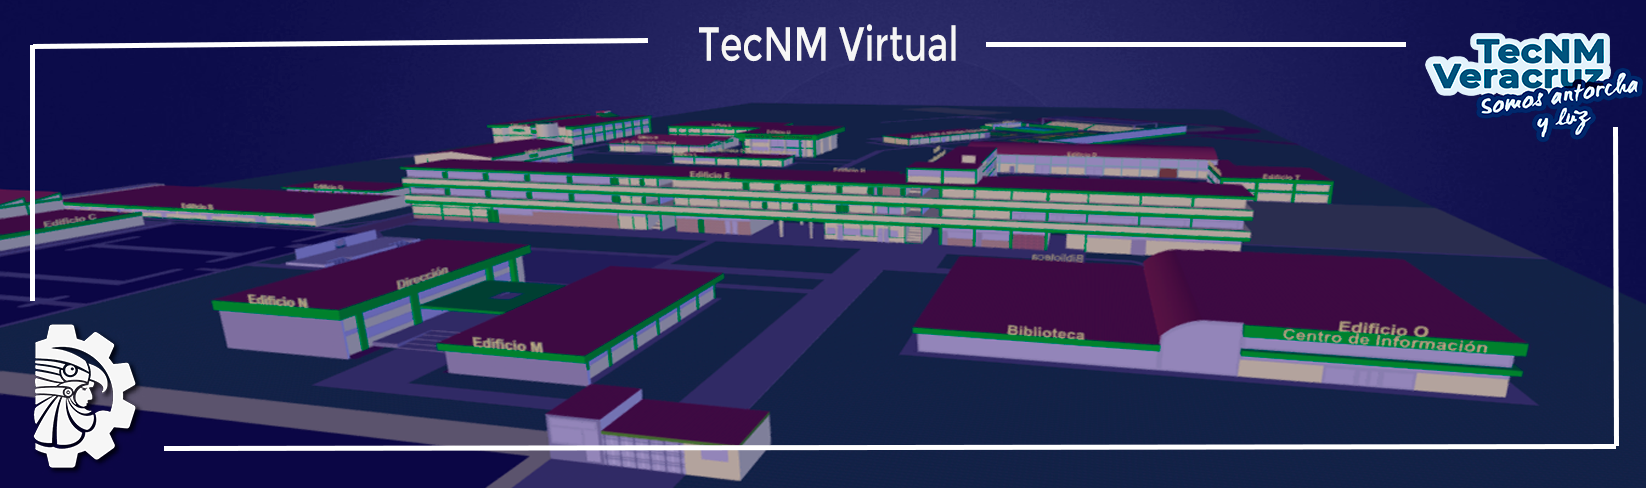 TecNM Virtual